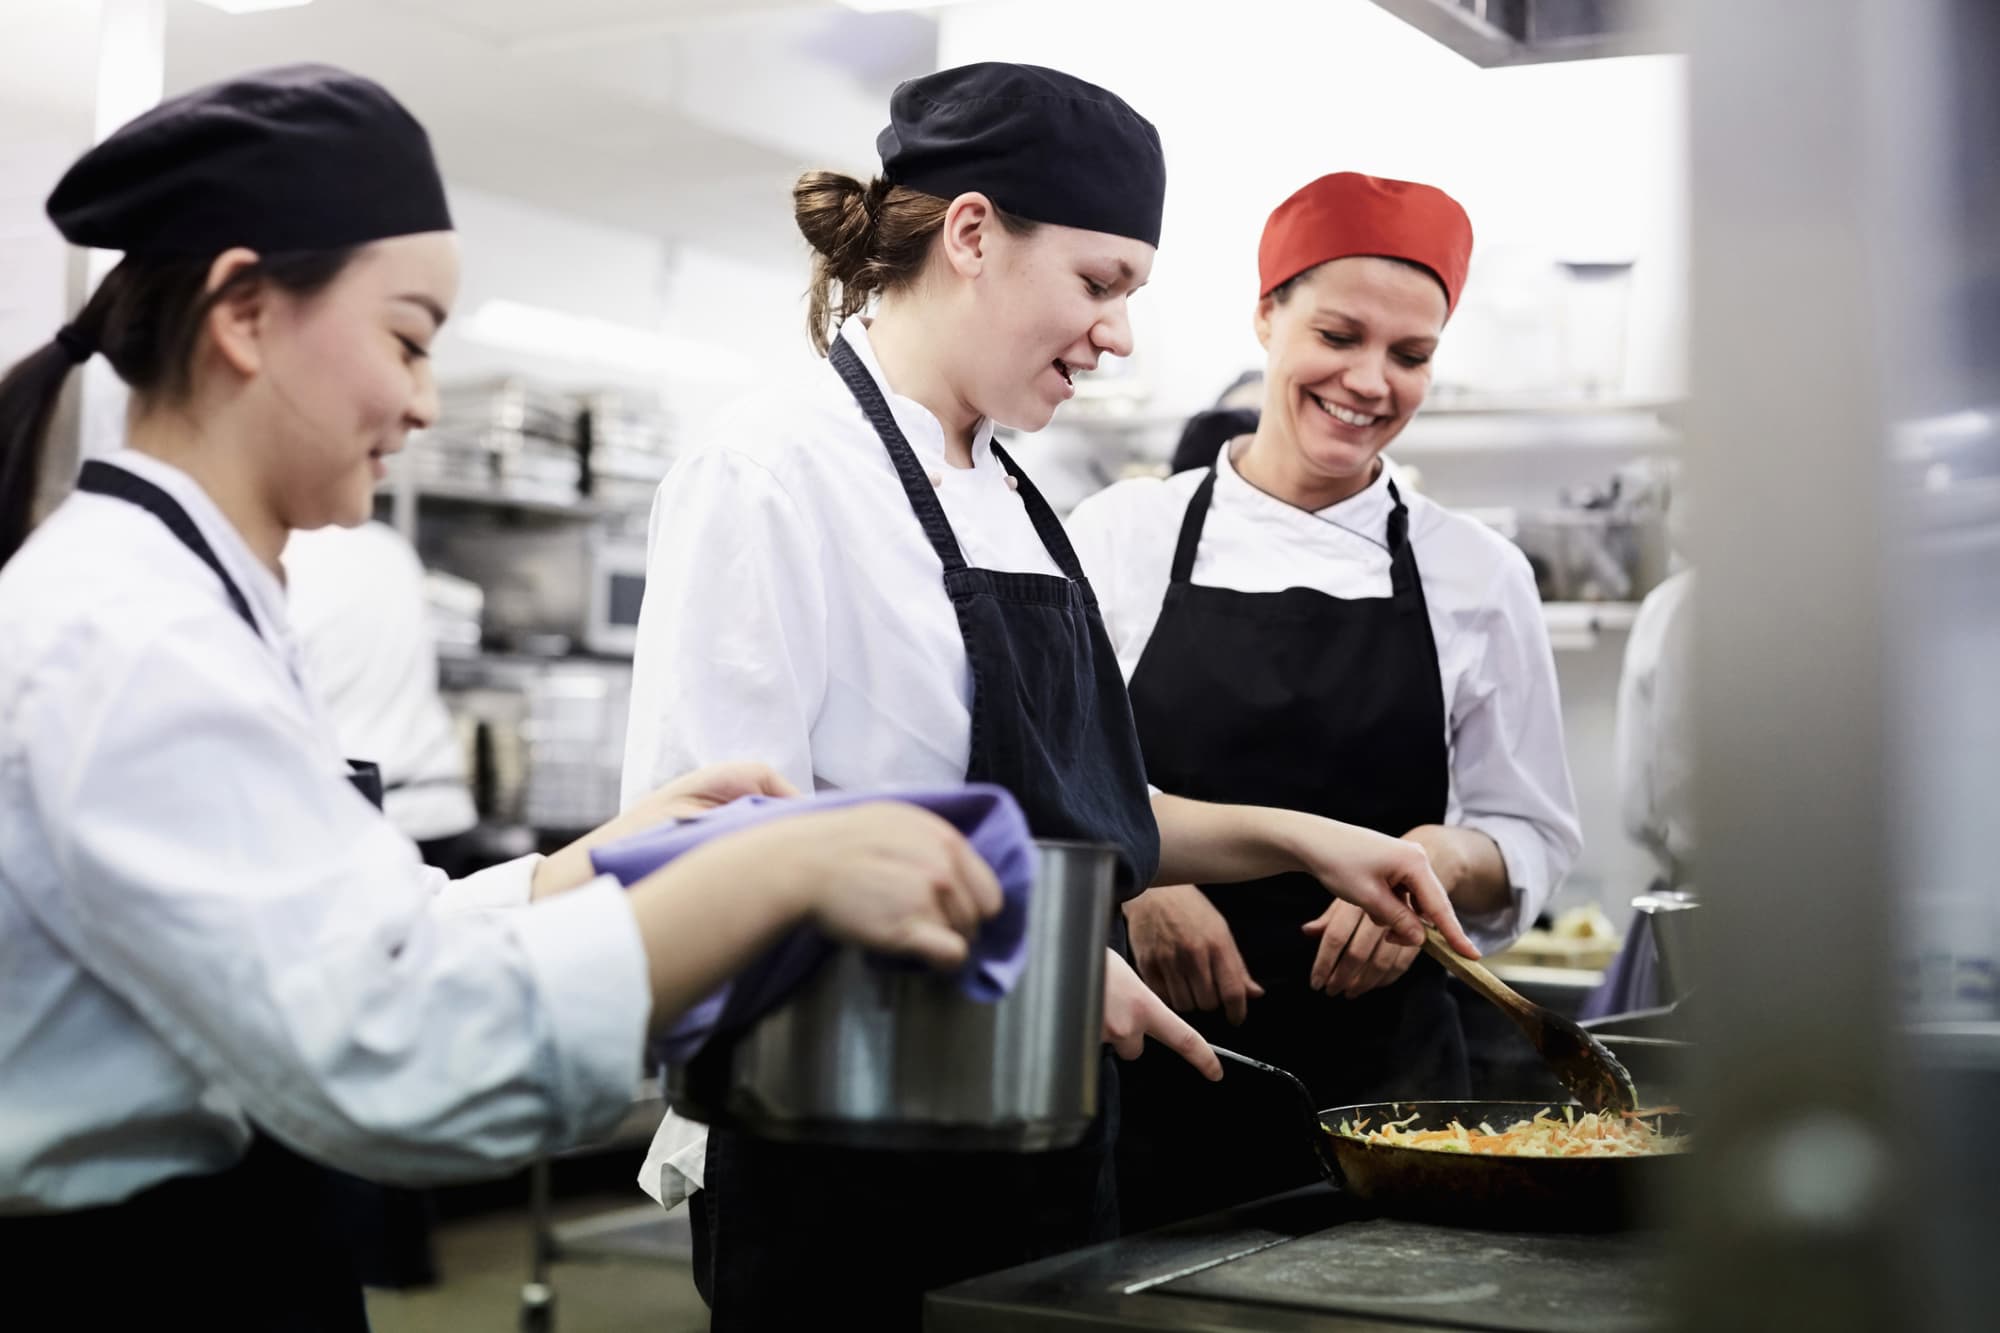 II. Benefits of Attending Culinary Schools